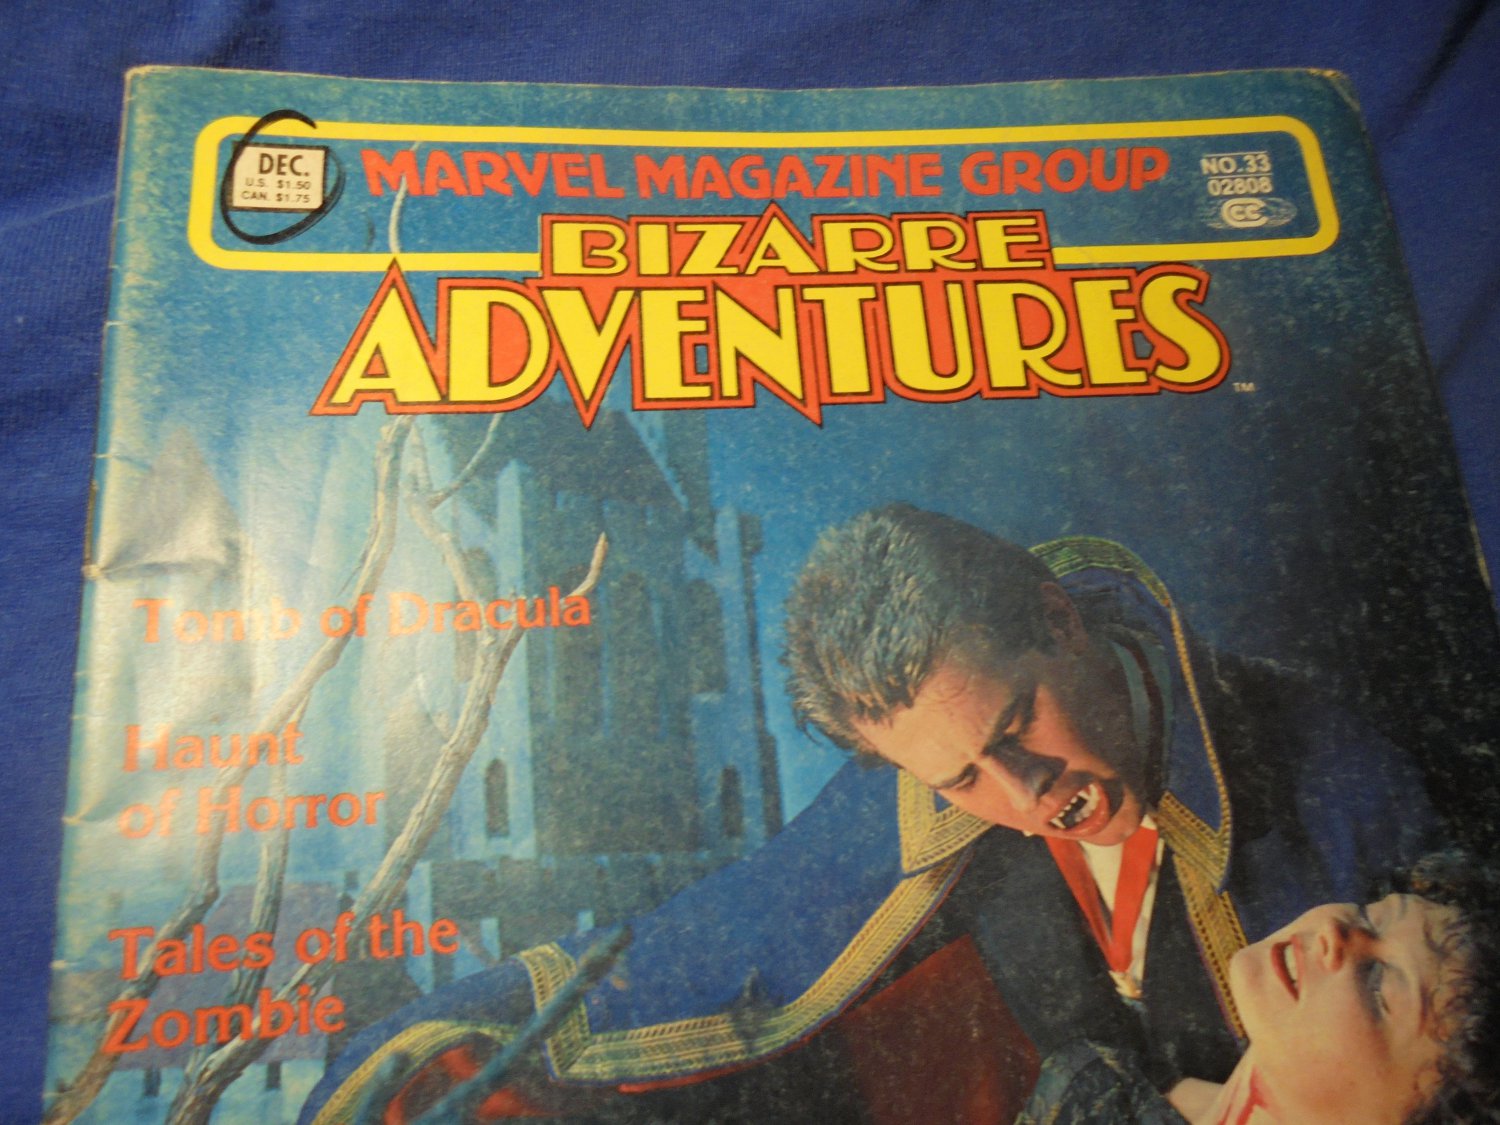 Bizarre Adventures Magazine #33 * ALL HORROR Issue! GD/VG * Vampires! Zombies! $4.00 obo!